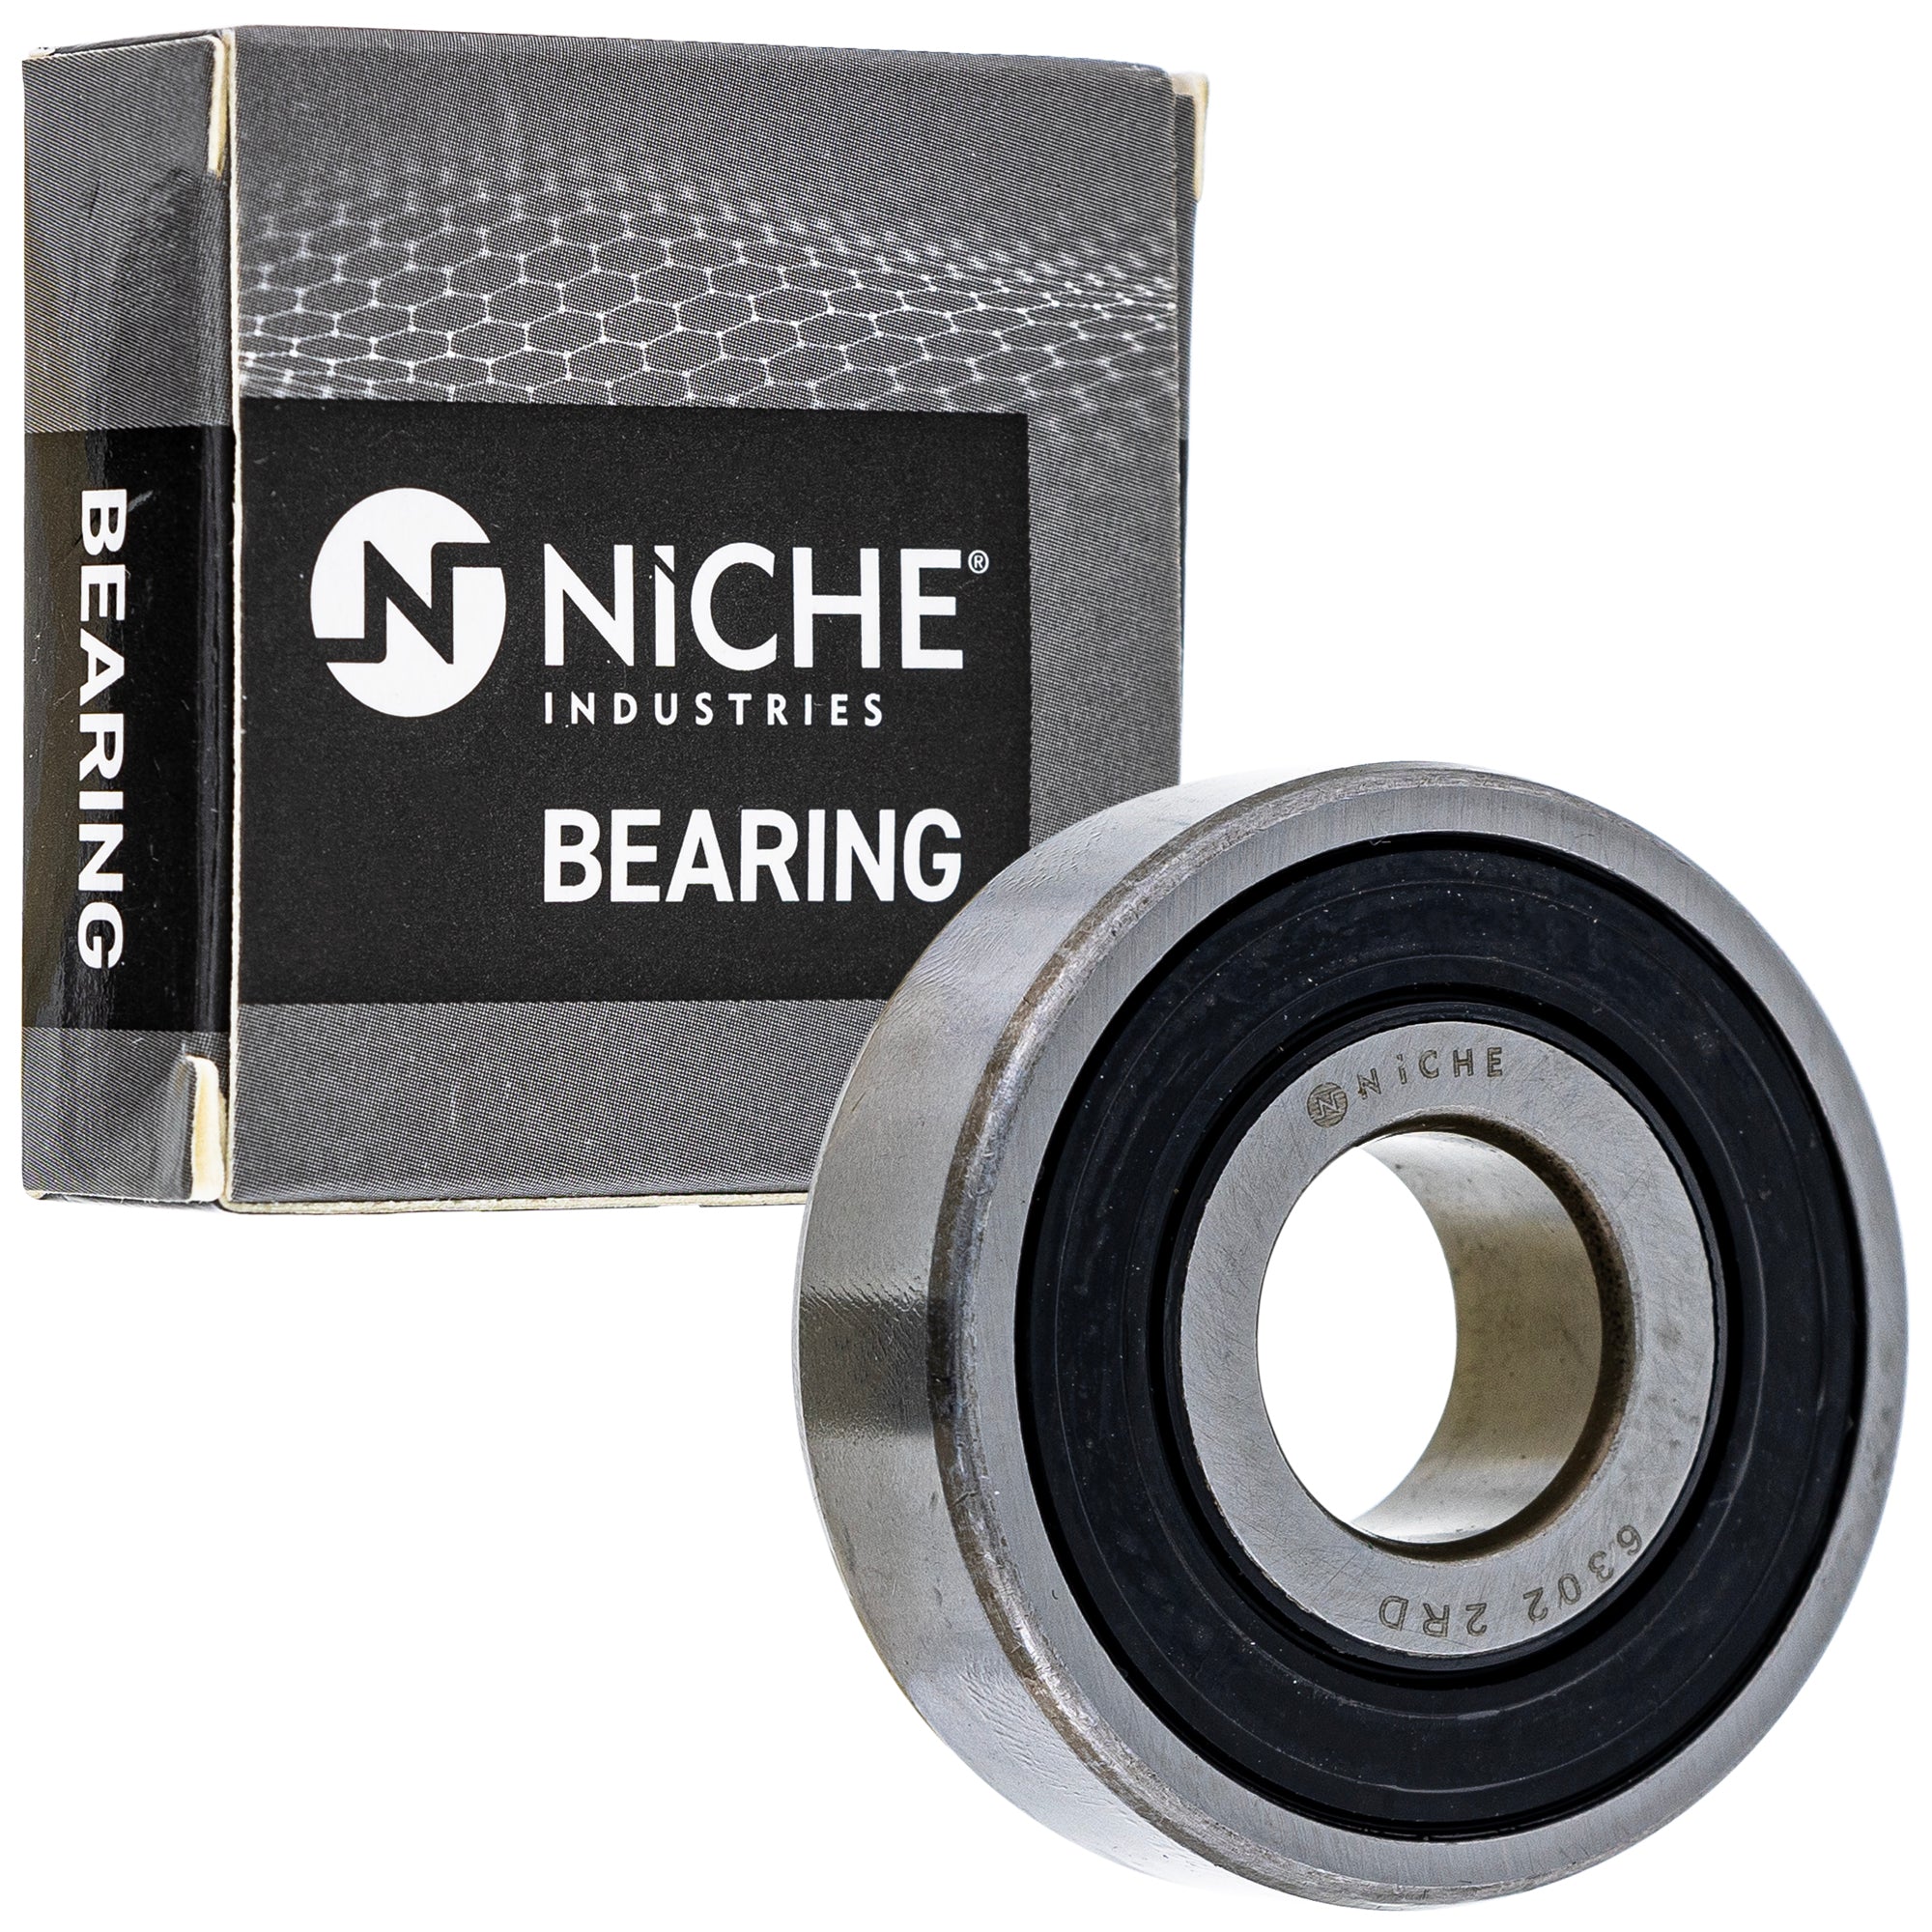 NICHE 519-CBB2324R Bearing 10-Pack for zOTHER XL125S Virago V65 V30